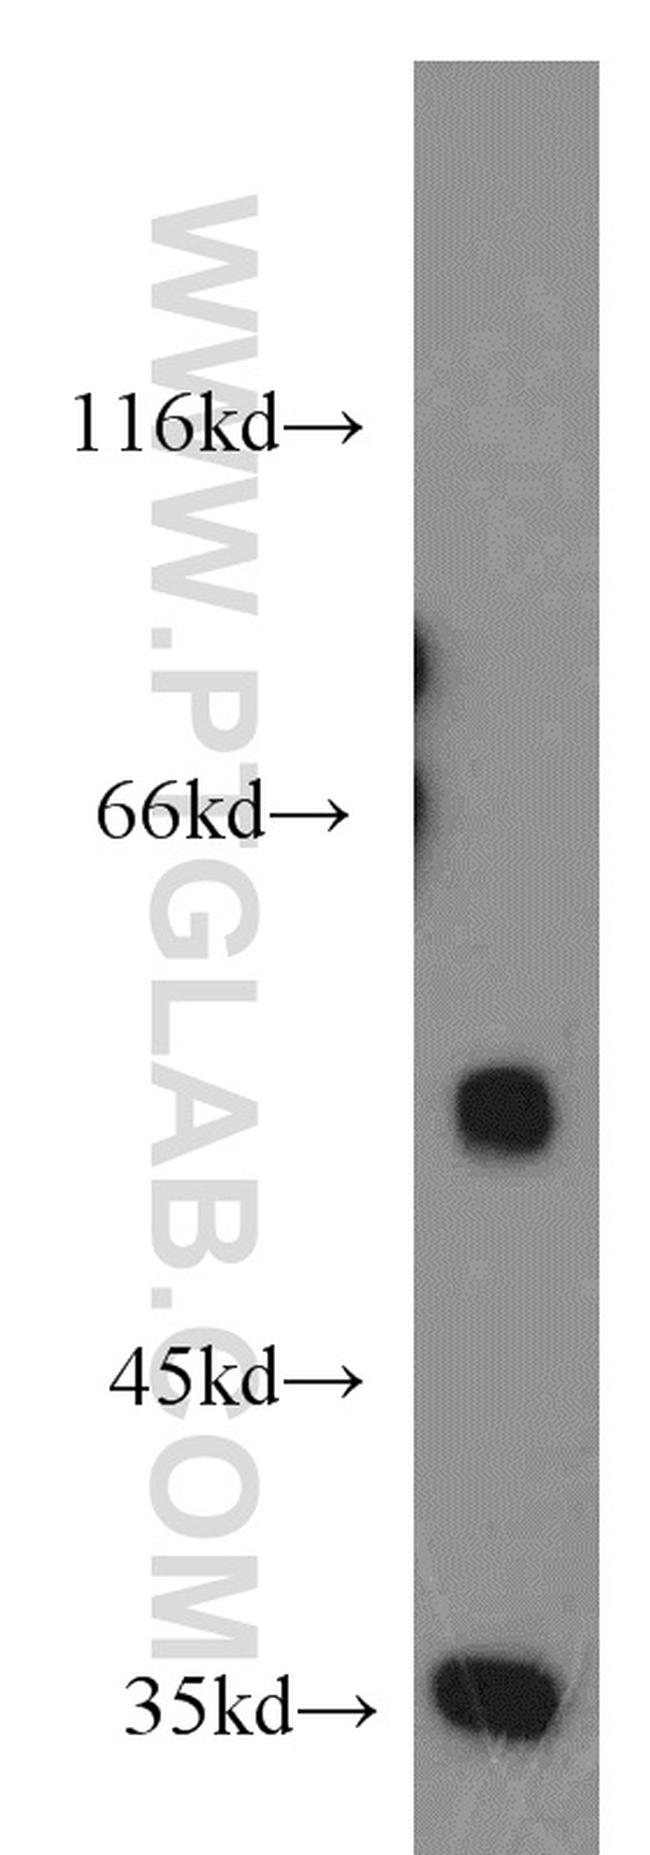 CDK8 Antibody in Western Blot (WB)